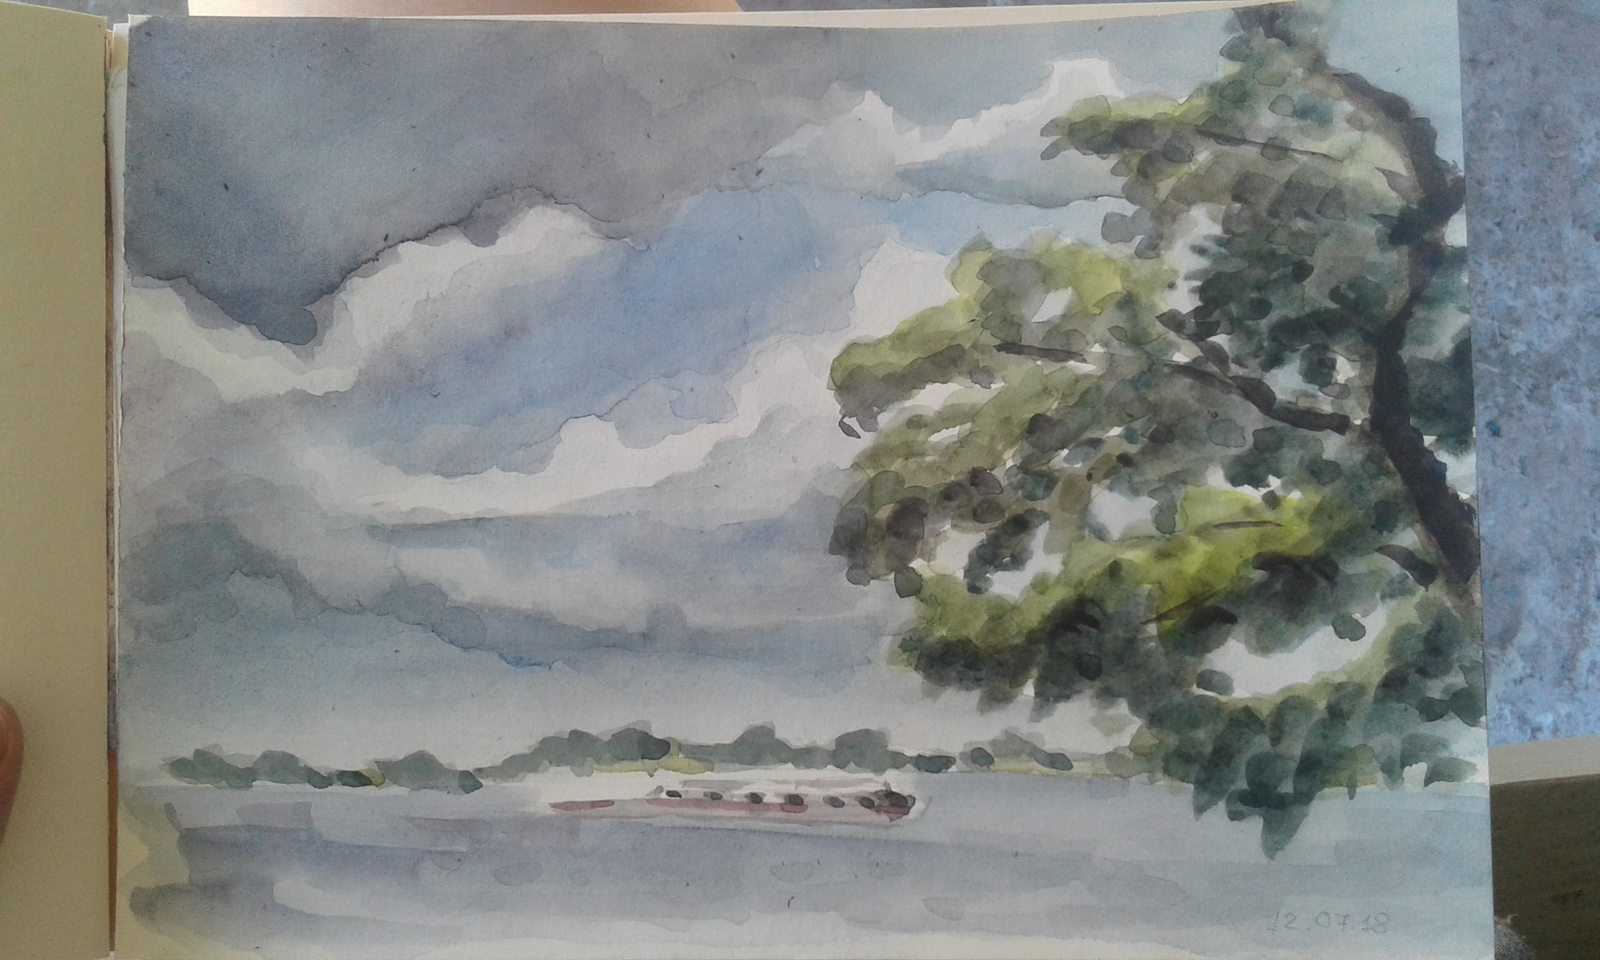 Samara embankment - My, Watercolor, Embankment, Samara, Painting, Drawing, Landscape, Shore, Tree